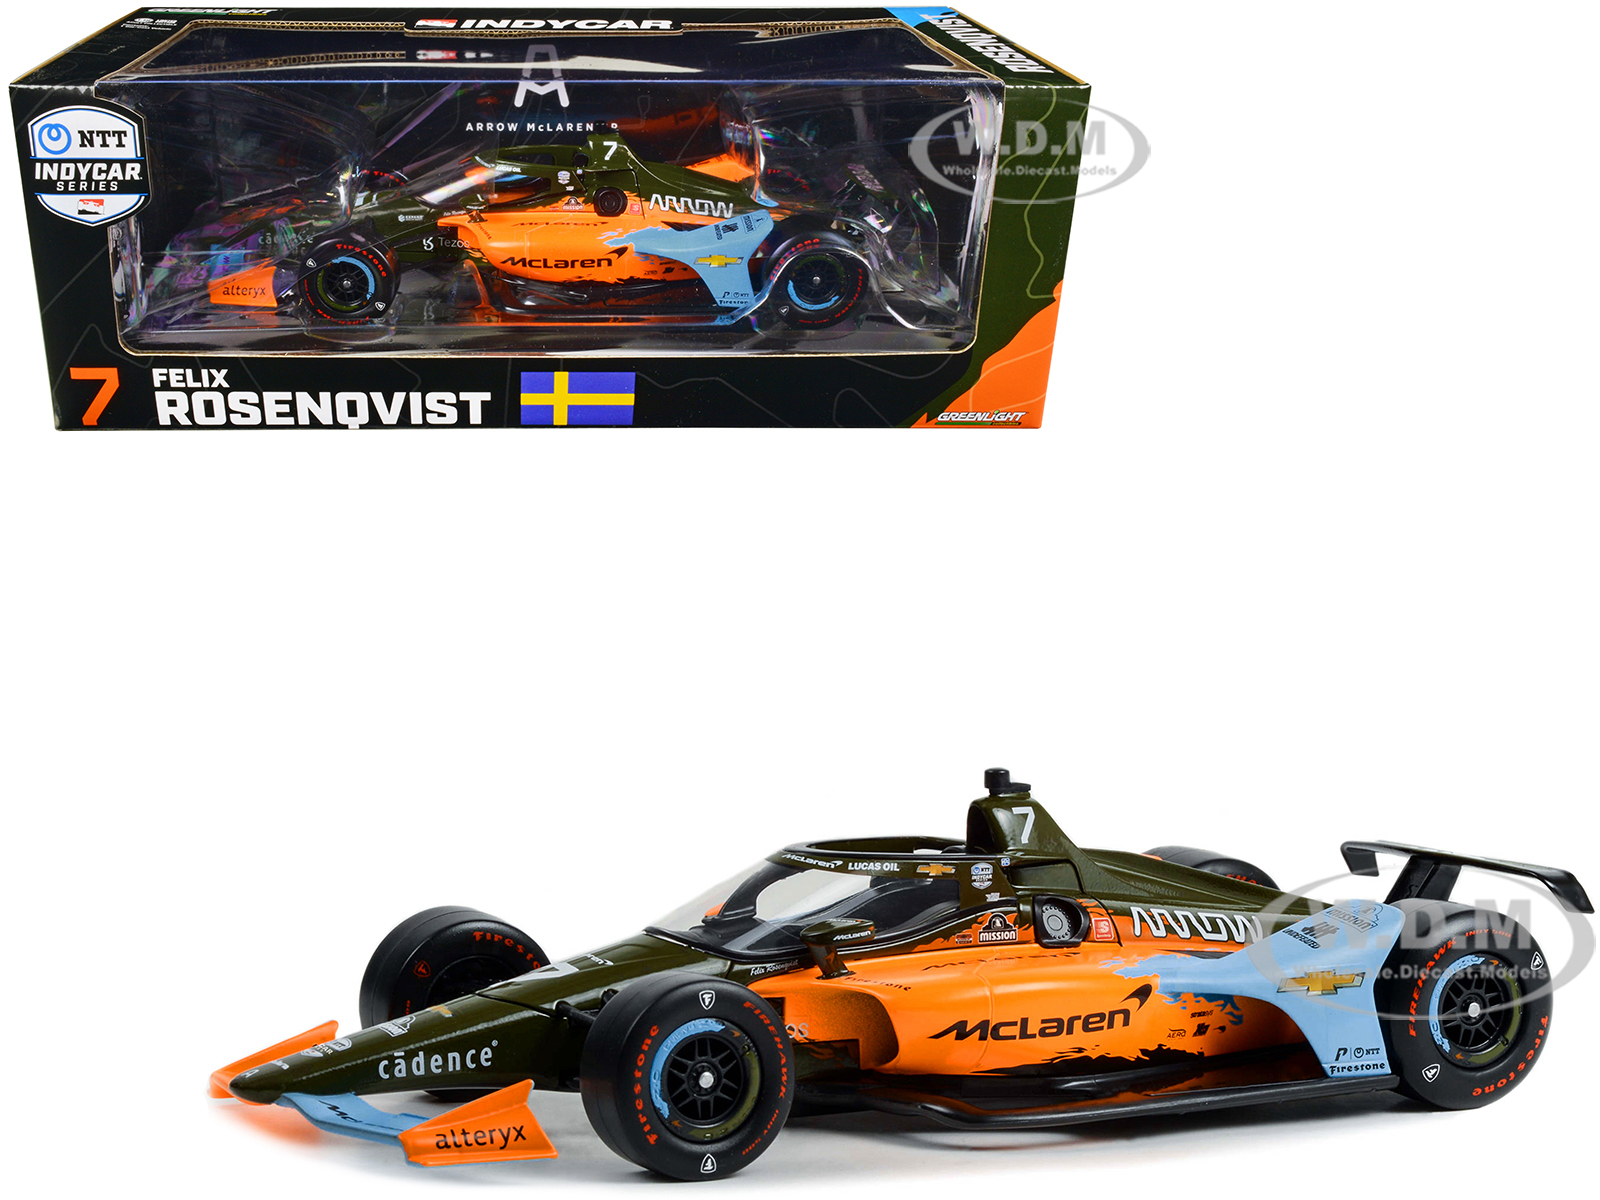 Dallara IndyCar 7 Felix Rosenqvist "UNDEFEATED" Arrow McLaren SP Indianapolis 500 "NTT IndyCar Series" (2022) 1/18 Diecast Model Car by Greenlight